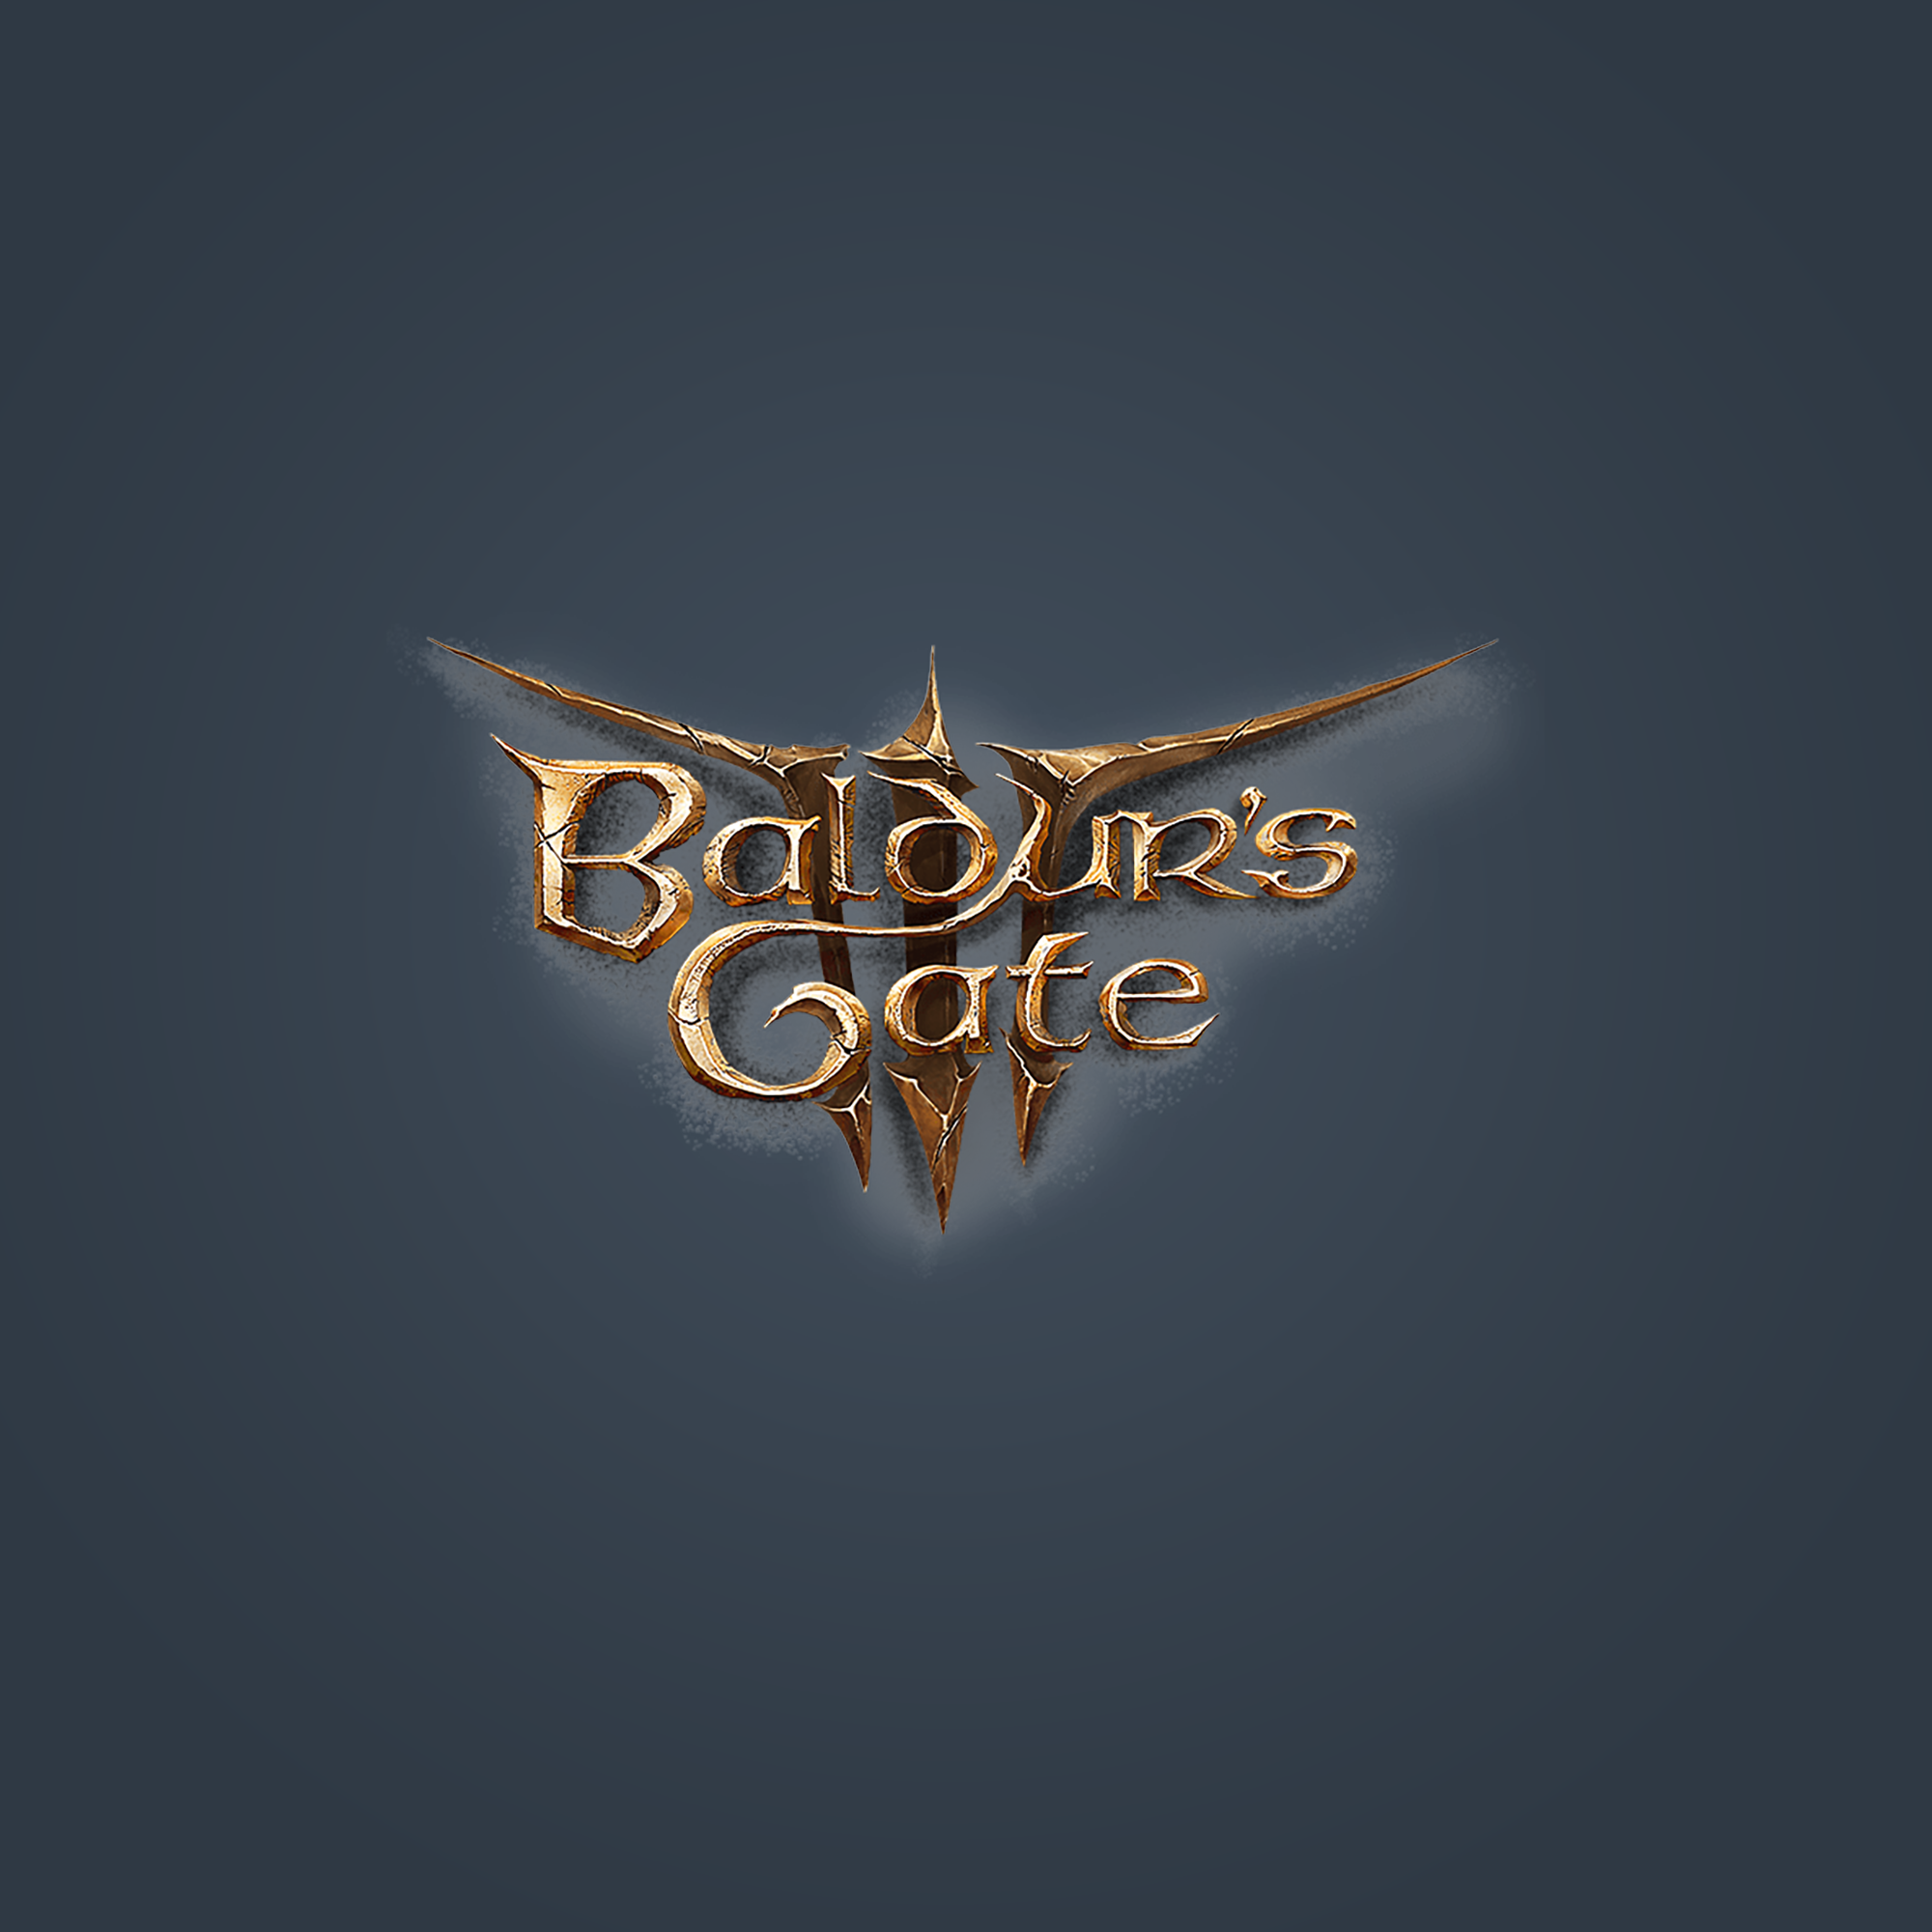 Baldur's Gate 3 Review: A new gold standard for RPGs